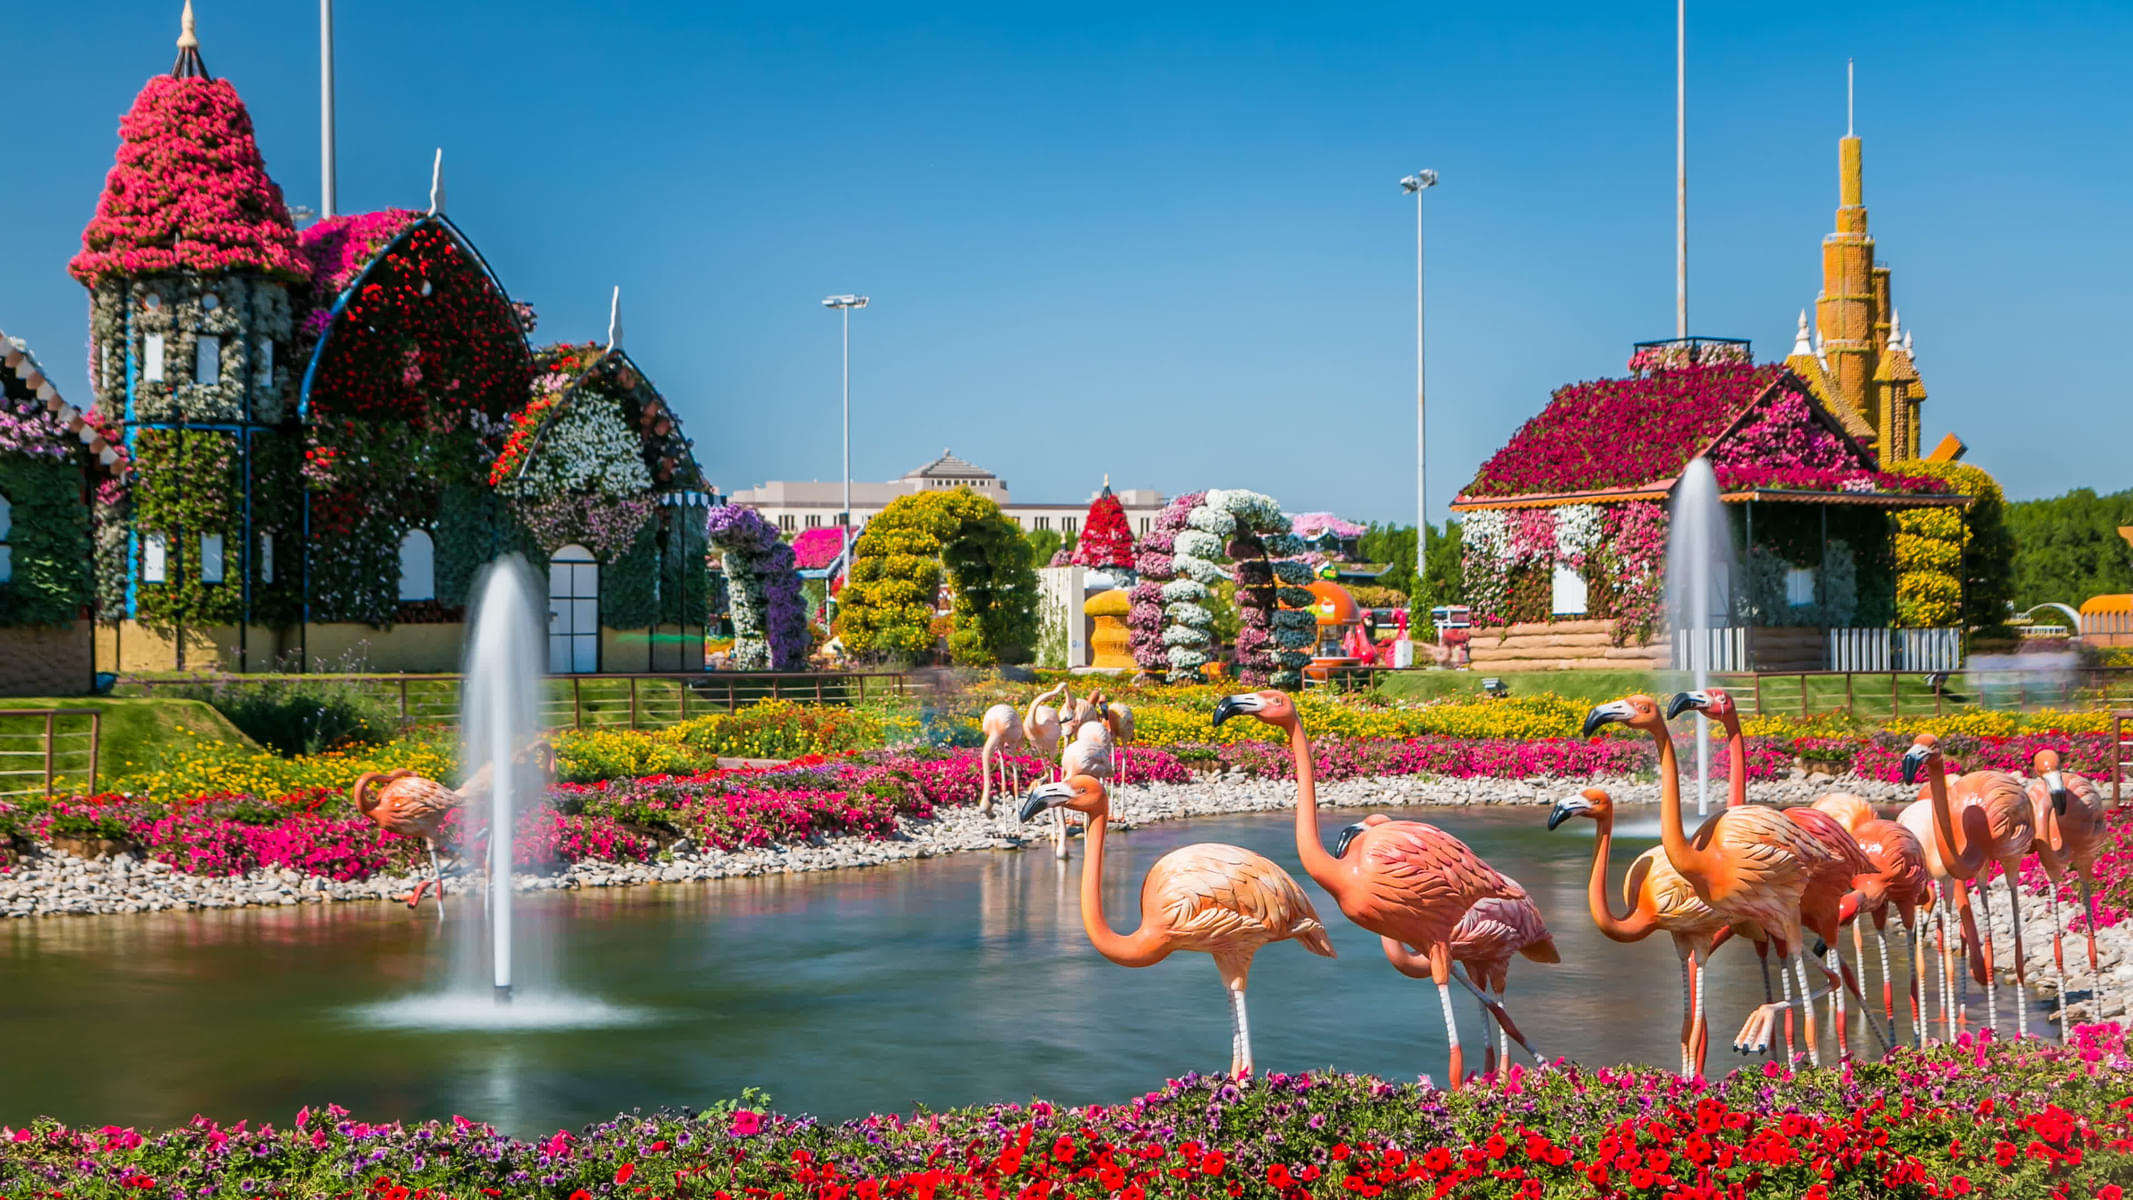 How to Get to Dubai Frame from Dubai Miracle Garden